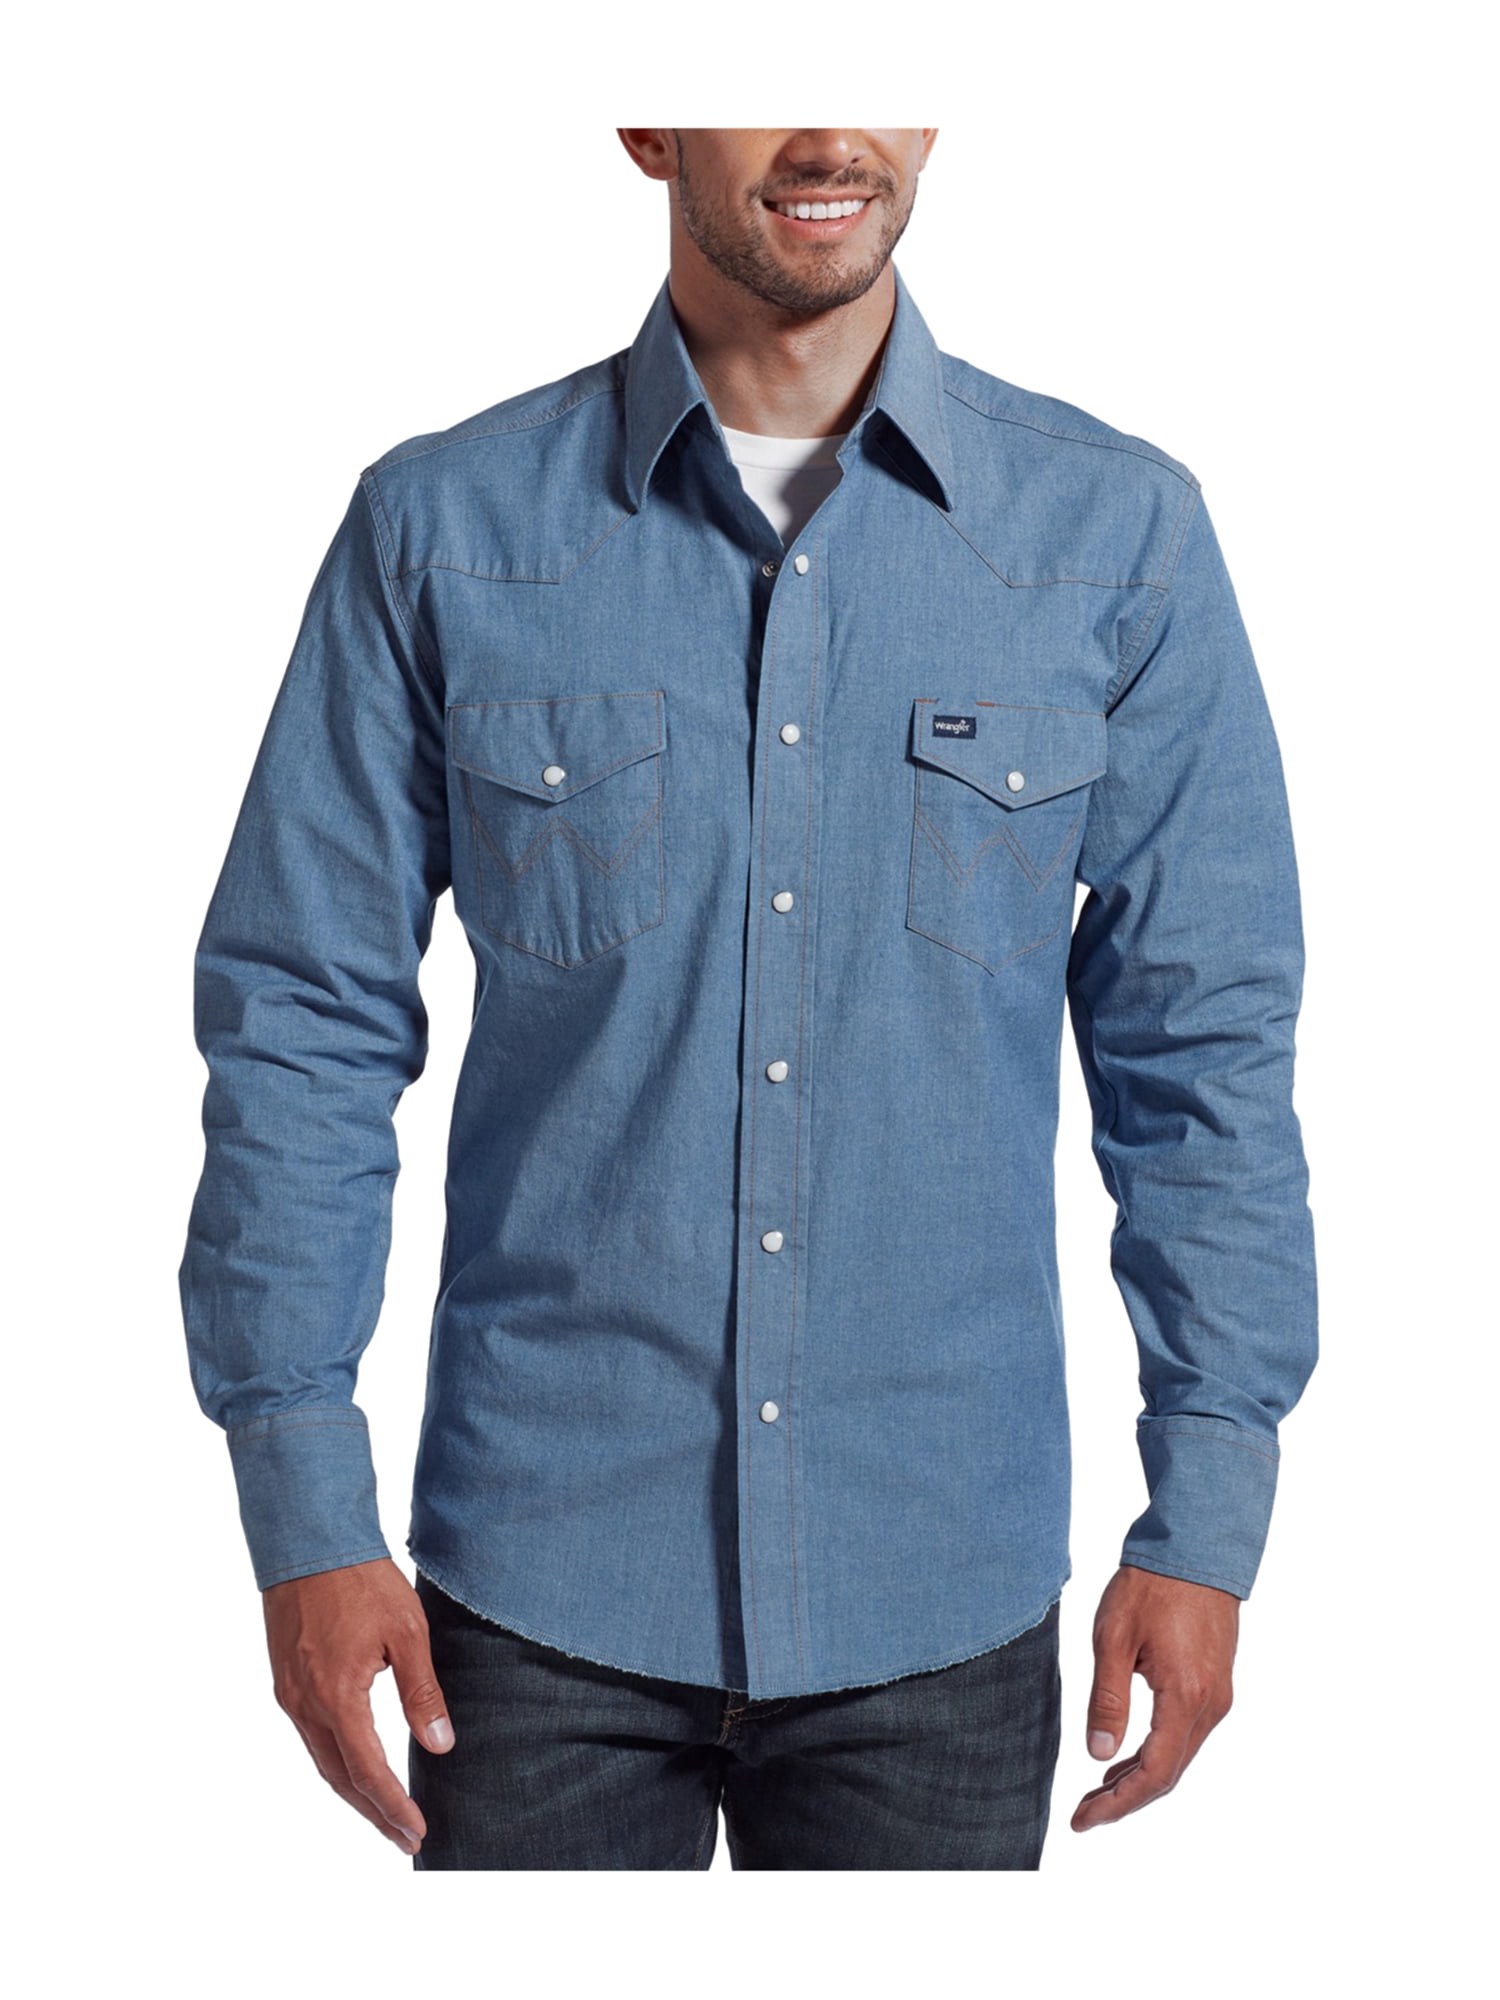 Wrangler Mens Authentic Western Button Up Shirt blue XL | Walmart Canada